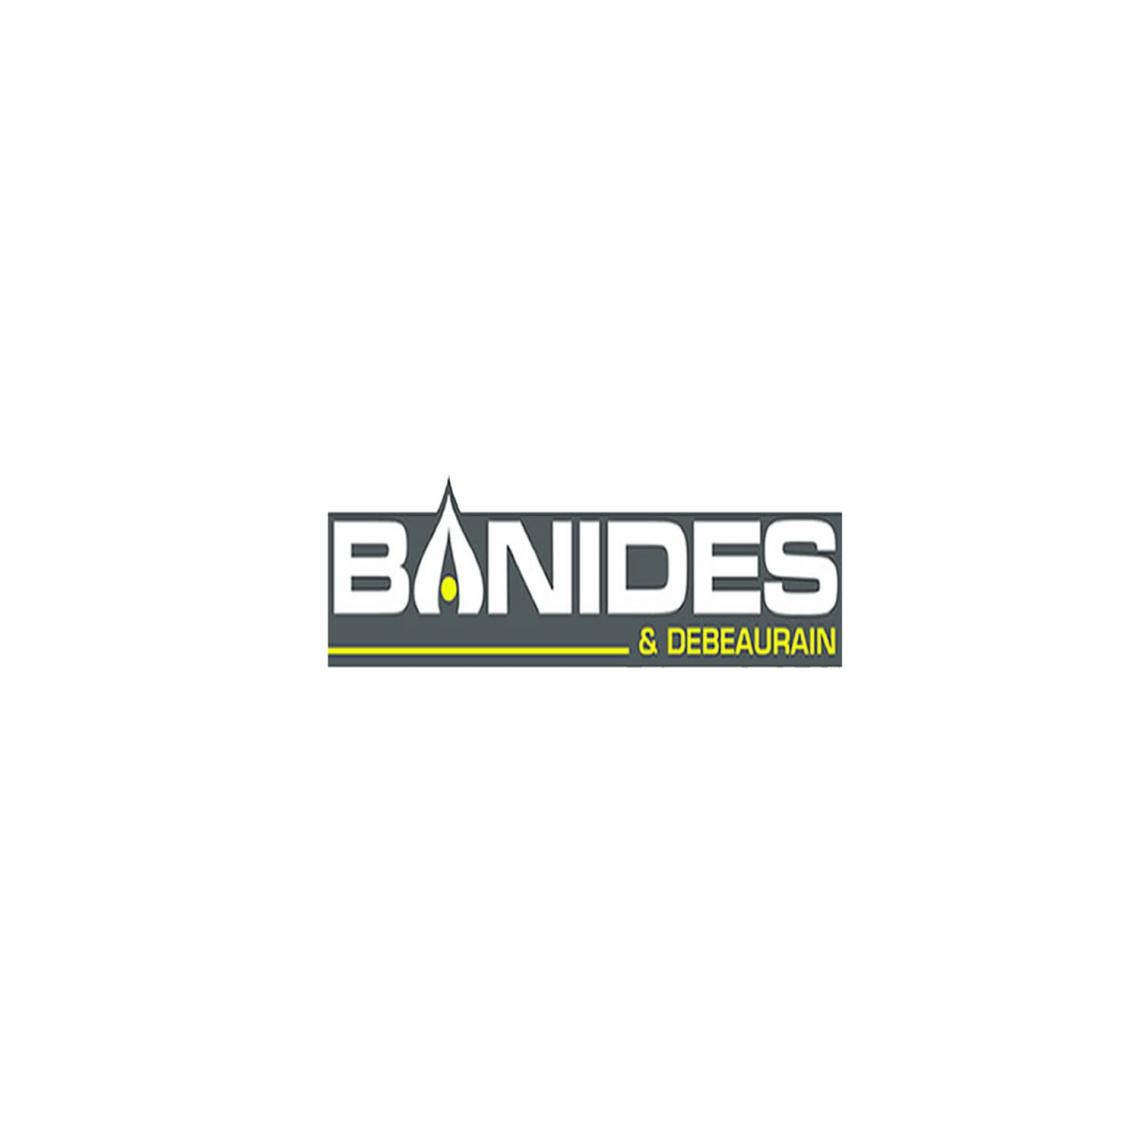 Banides & Debeaurain - raccord coudé - 180 degrés - a joint plat gaz - bd2206 - ecrou 1/2 - a braser sur cuivre : 16 dn - nf - banides et debeaurai - Flexible gaz